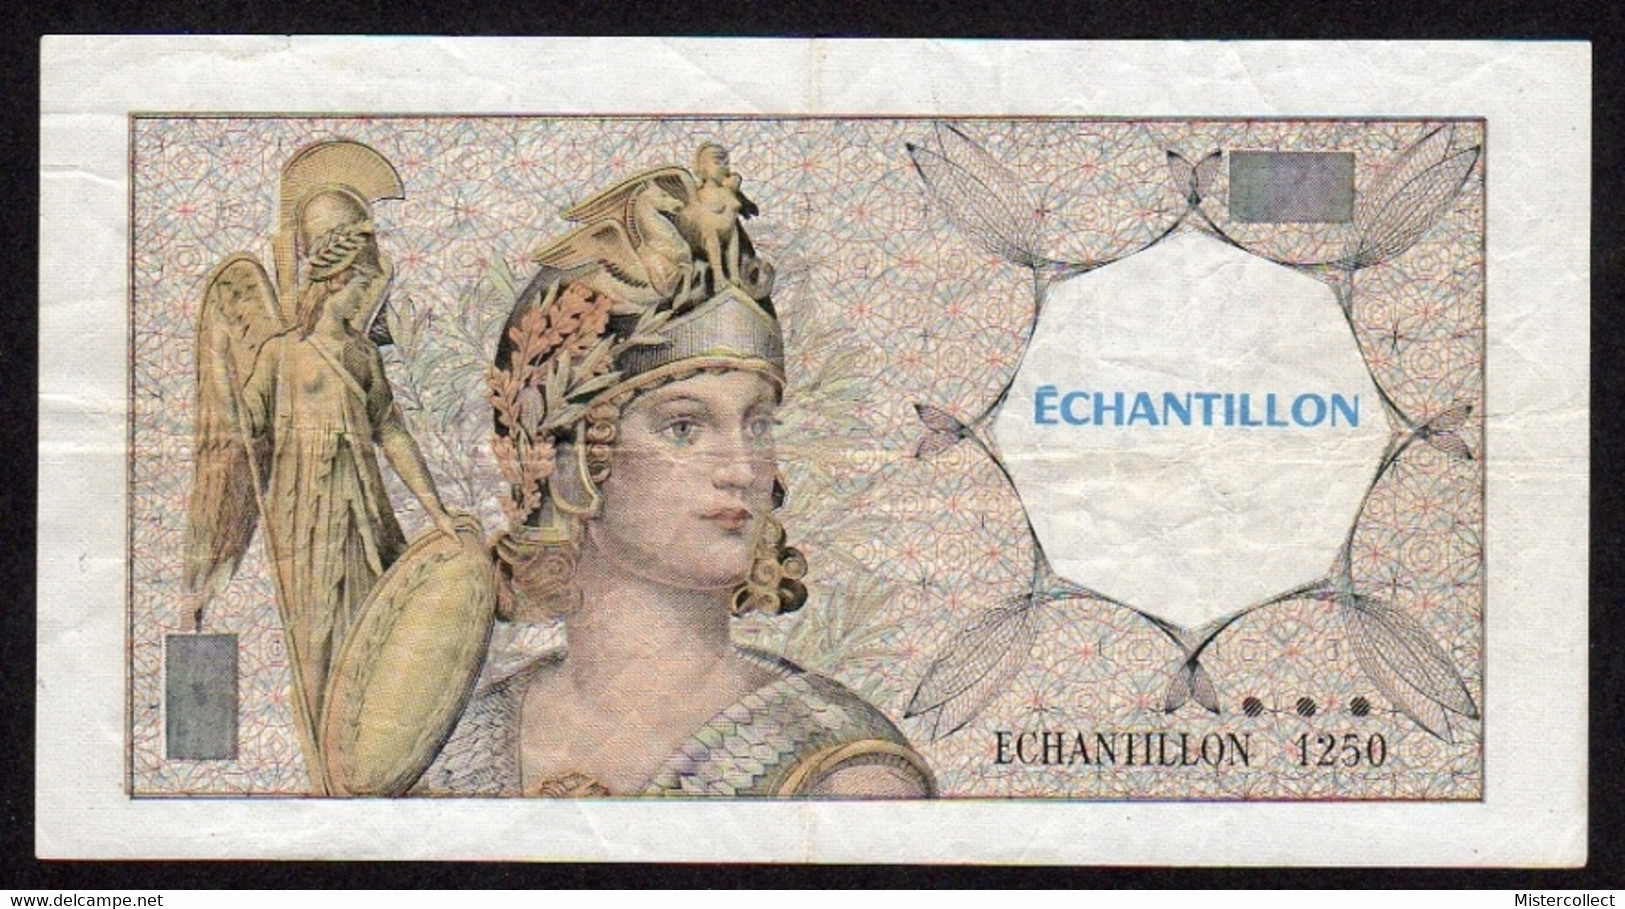 ECHANTILLON ATHENA 1250 - Specimen